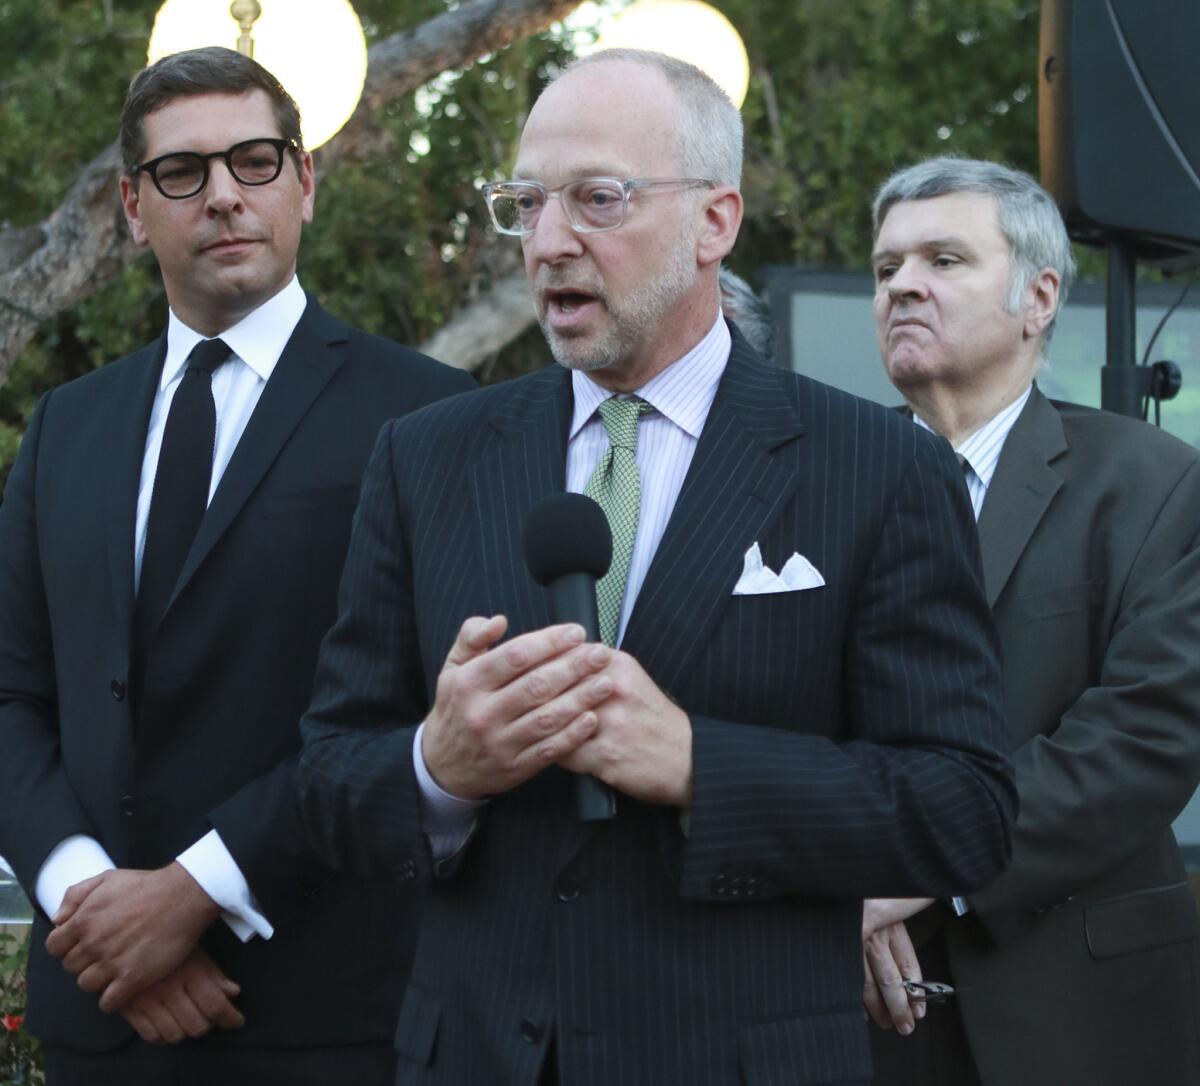 Rick Jacobs, former advisor to L.A. Mayor Eric Garcetti